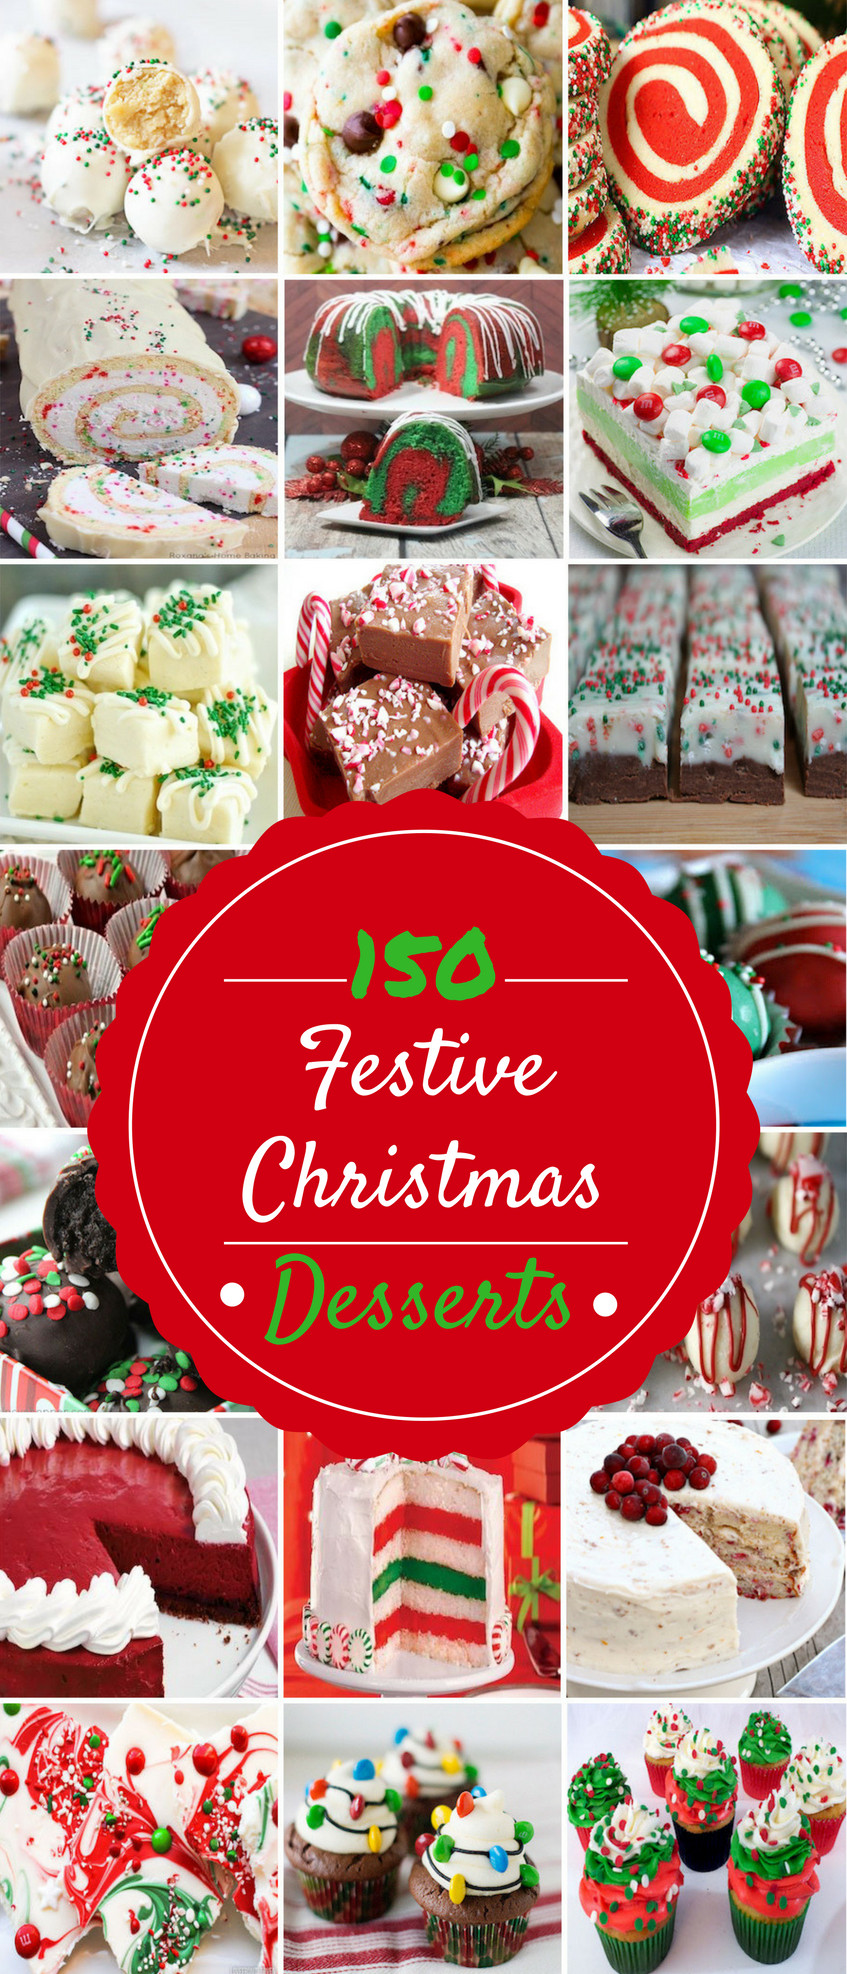 Festive Christmas Desserts
 150 Festive Christmas Desserts Prudent Penny Pincher